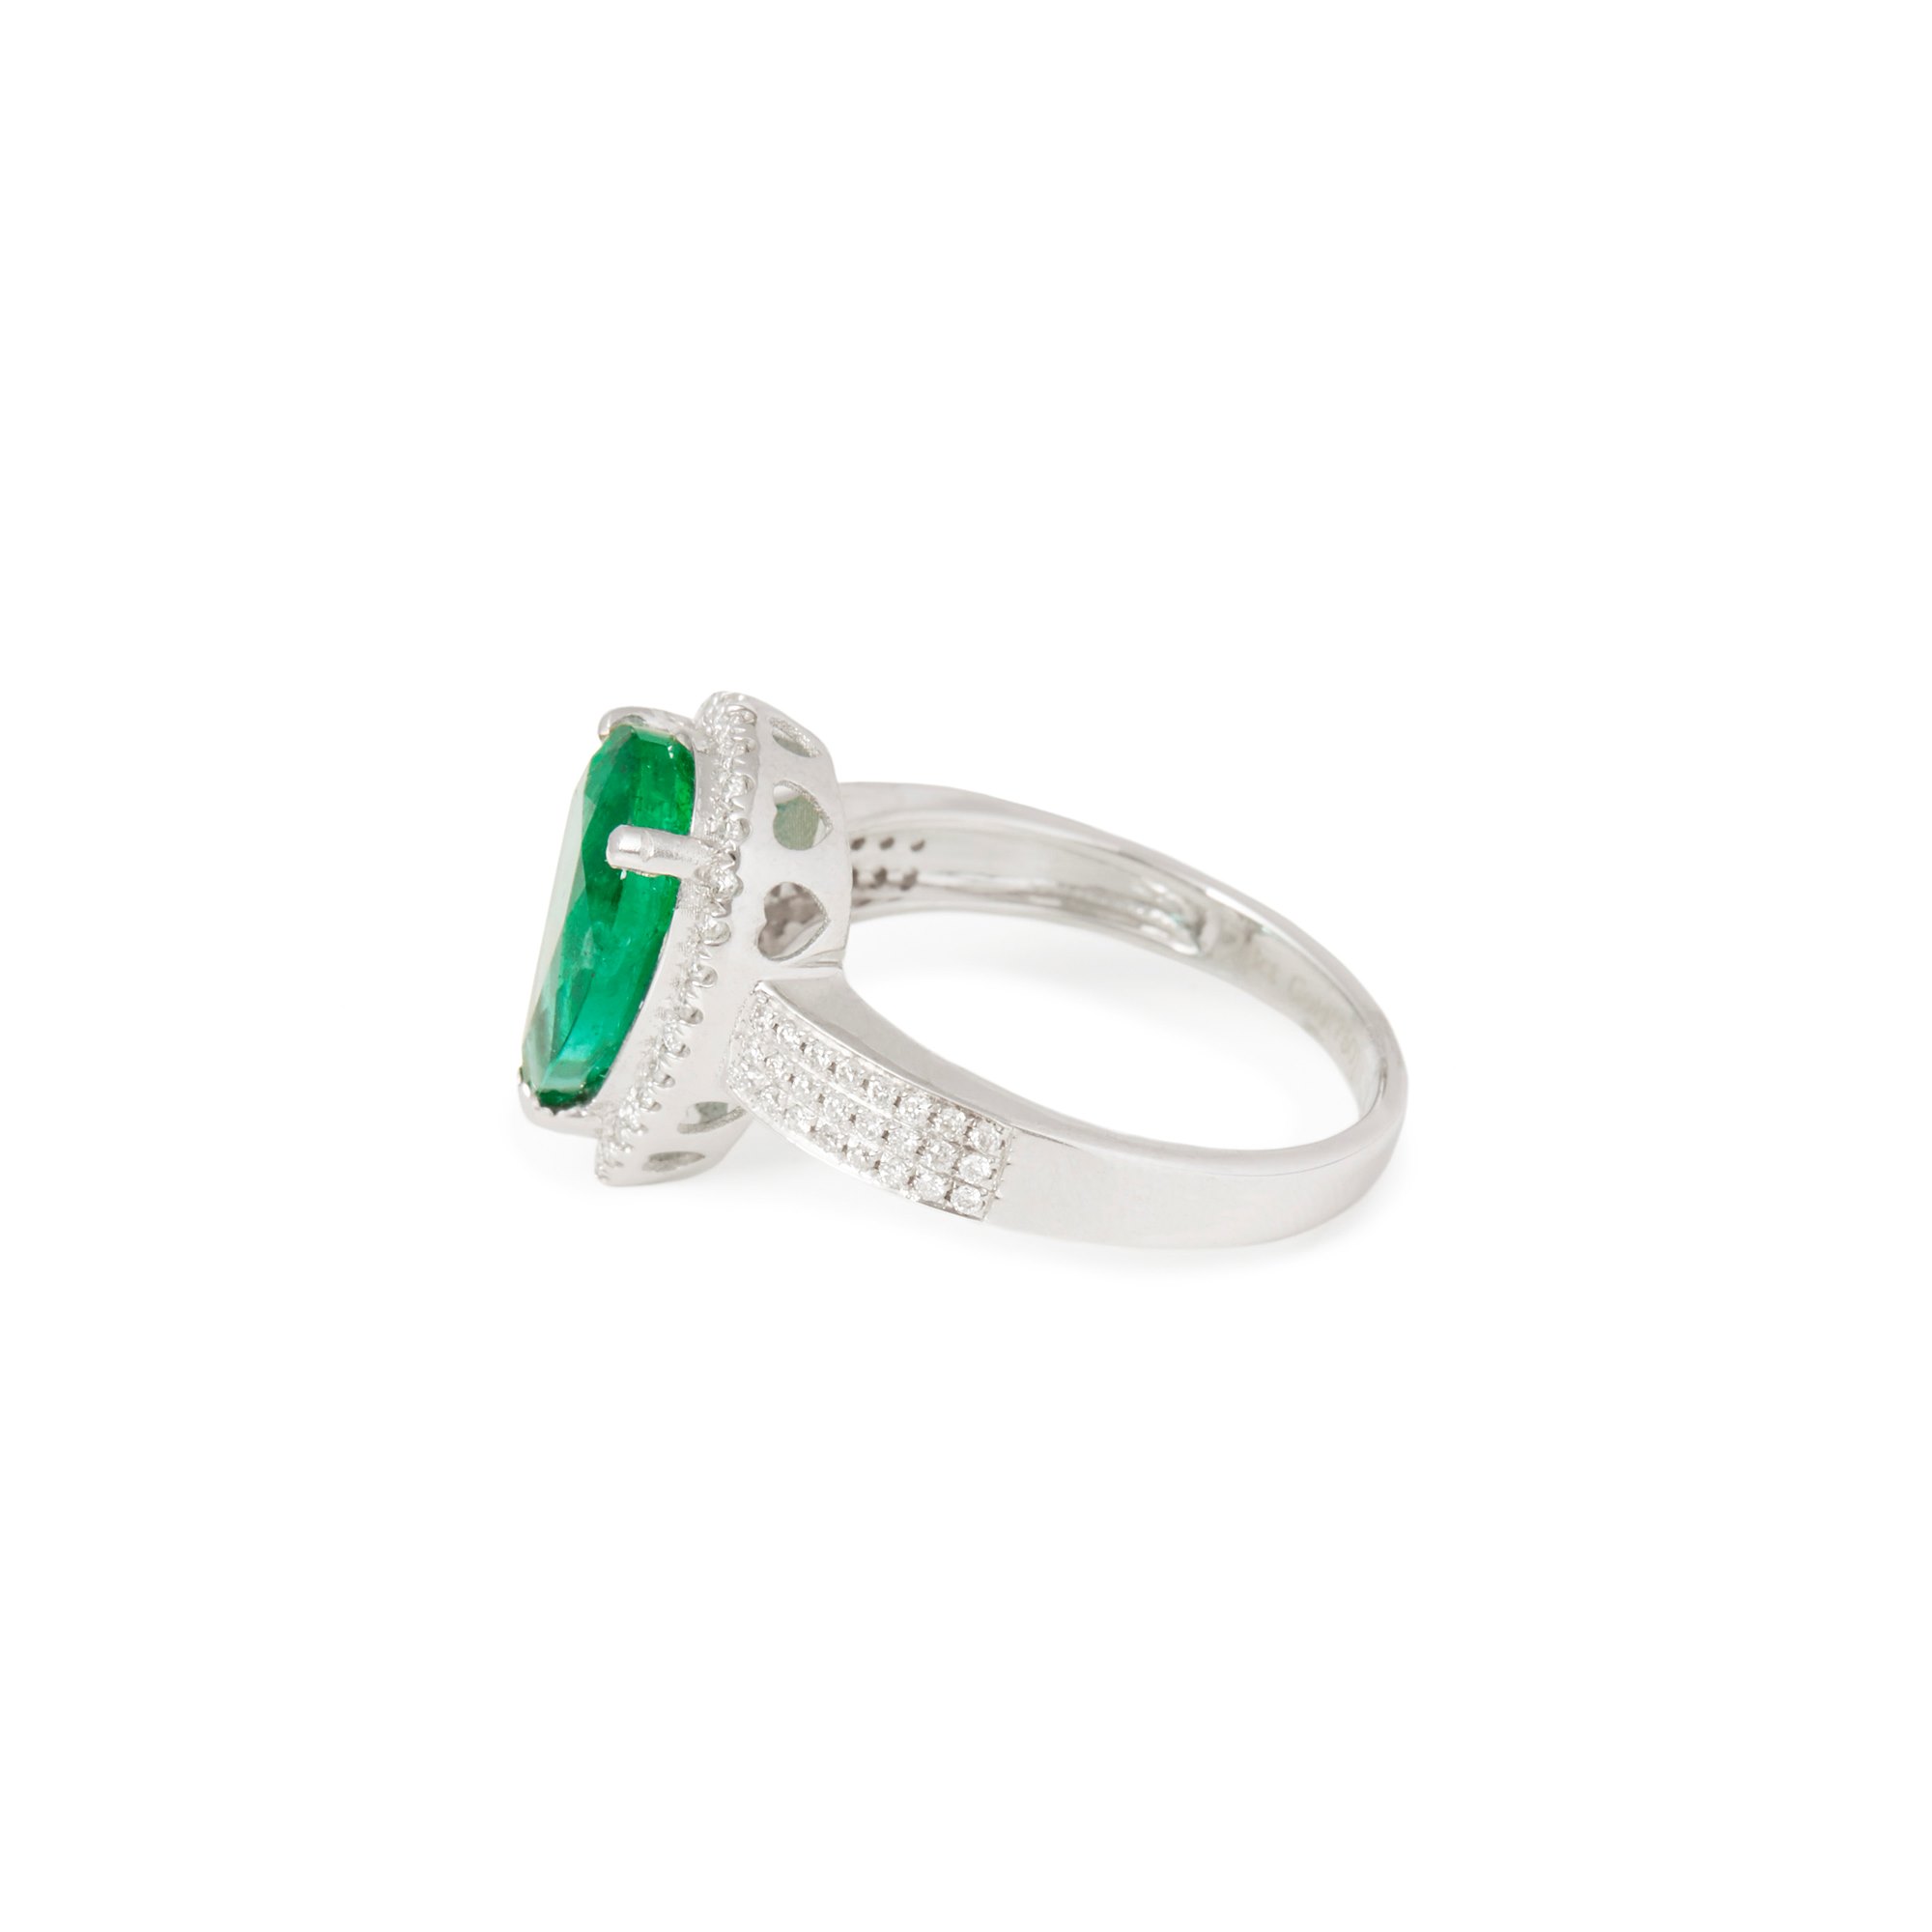 David Jerome Certified 3.66ct Untreated Zambian Pear Cut Emerald and Diamond 18ct Gold Ring